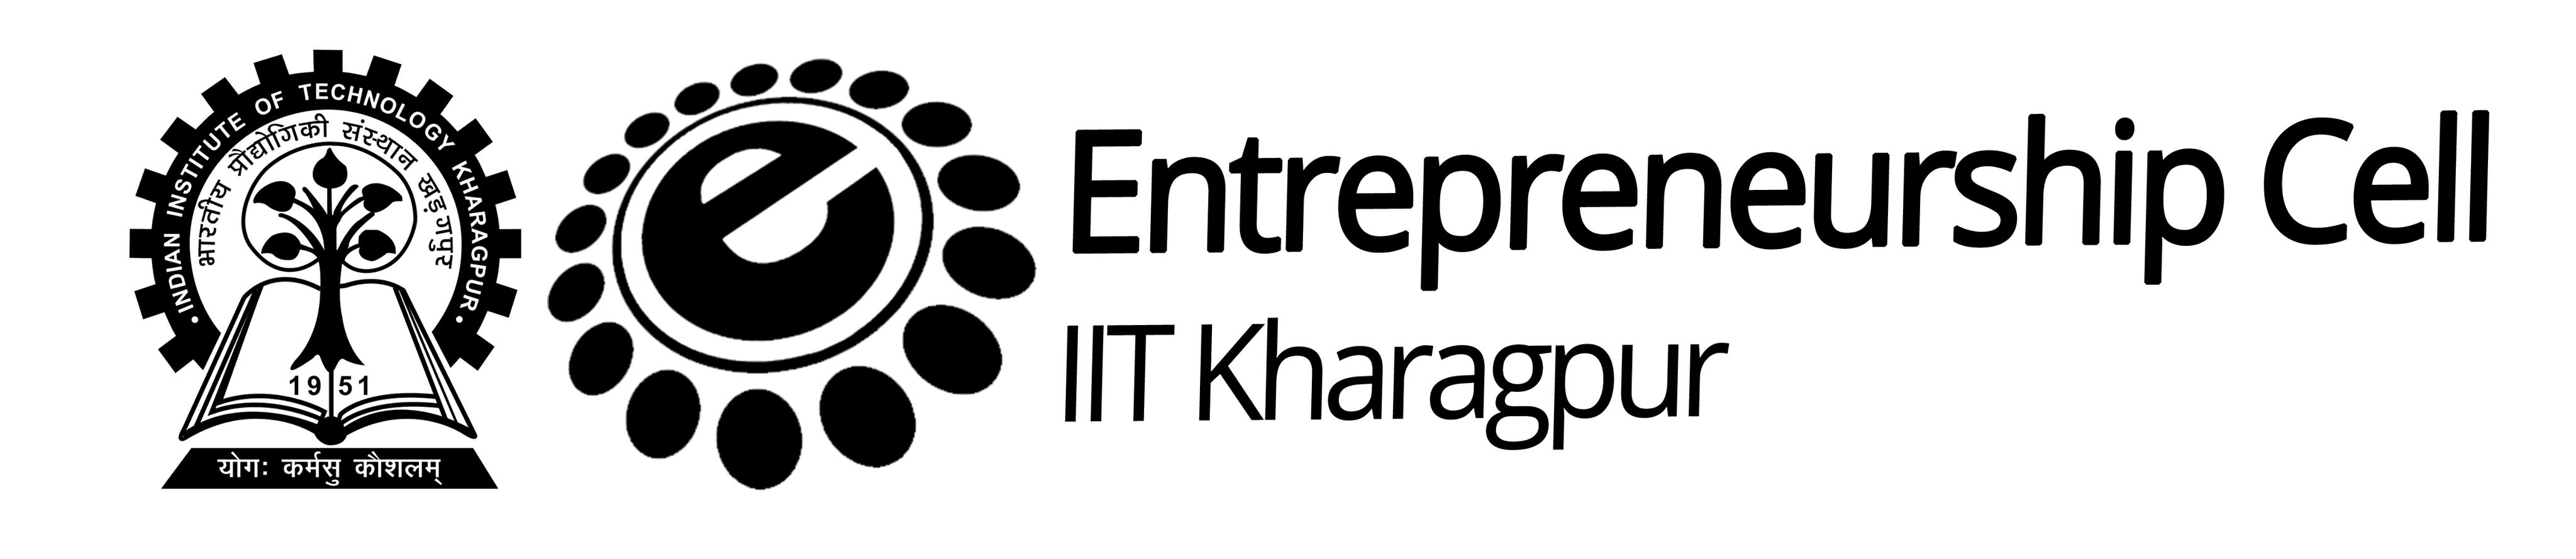 E-Cell-Logo-iit-karagpur